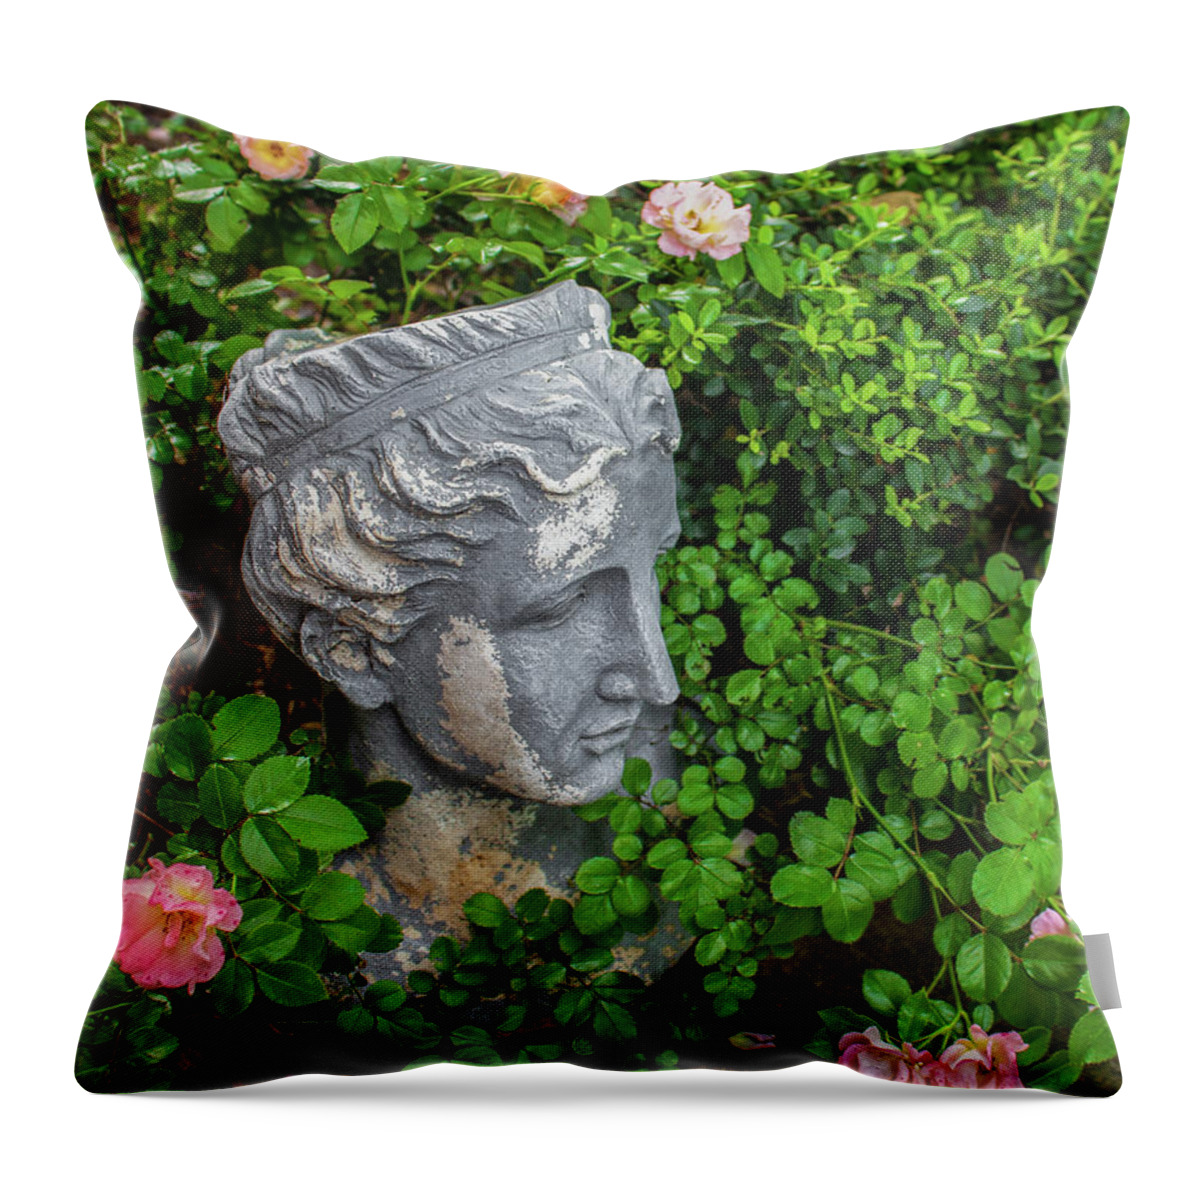 Tea Roses Throw Pillow featuring the photograph Grecian head in tea rose garden by Susan Vineyard